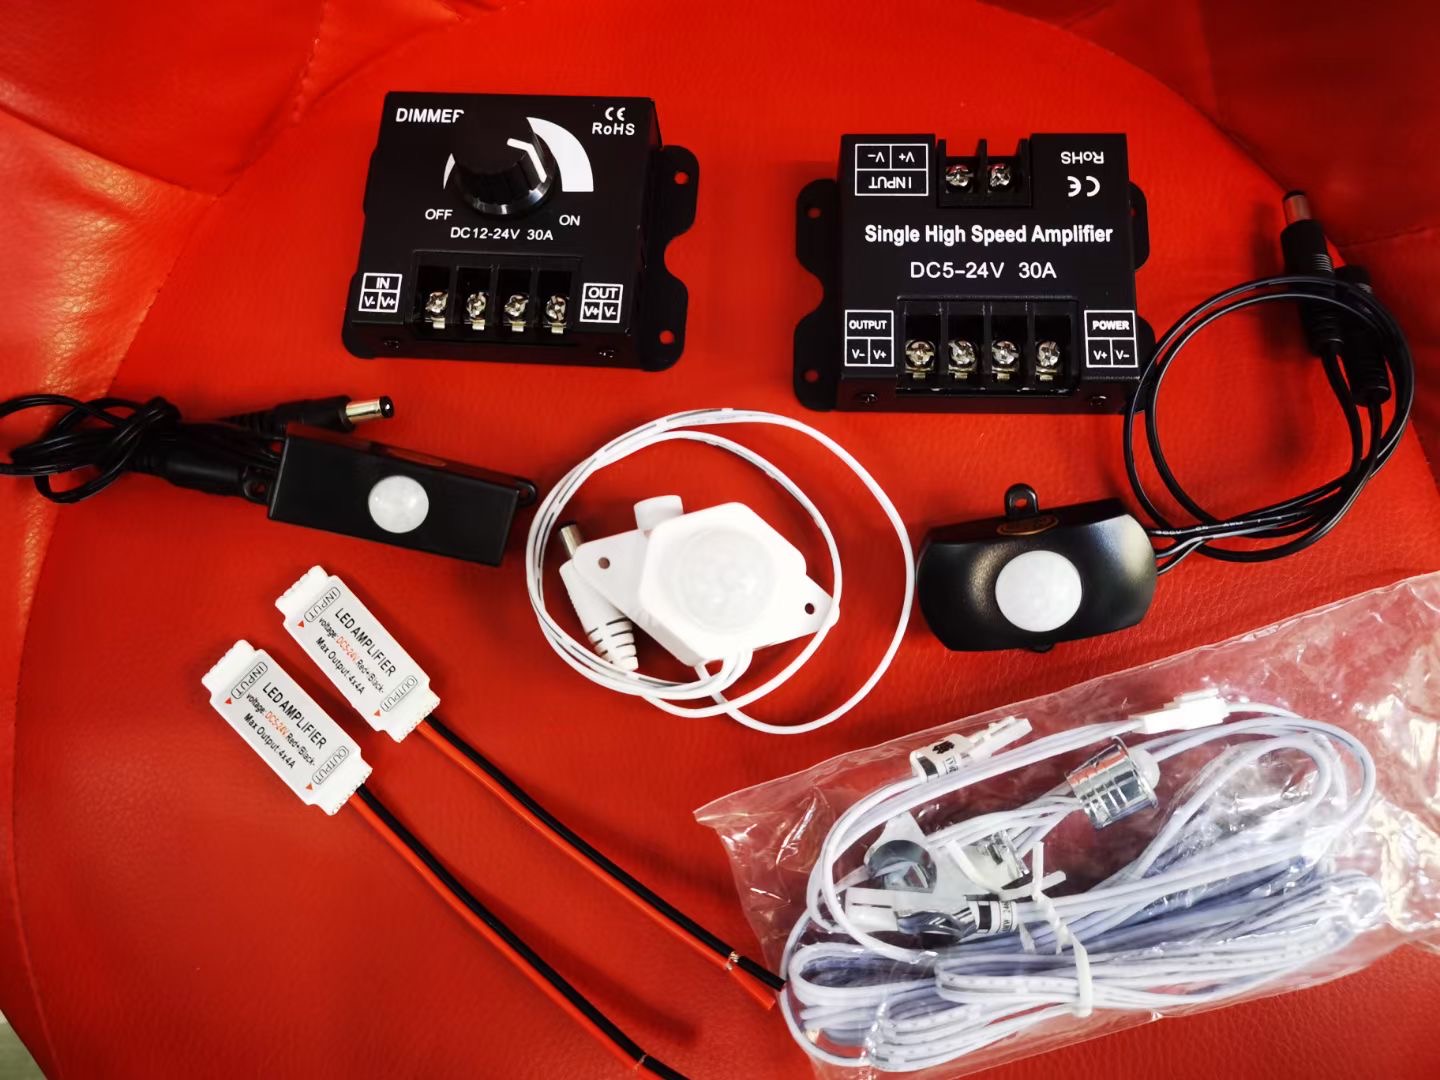 Single Color Mini LED Controller with Dynamic Modes - RF Remote - DC5V ~24V, MCBRF-12A